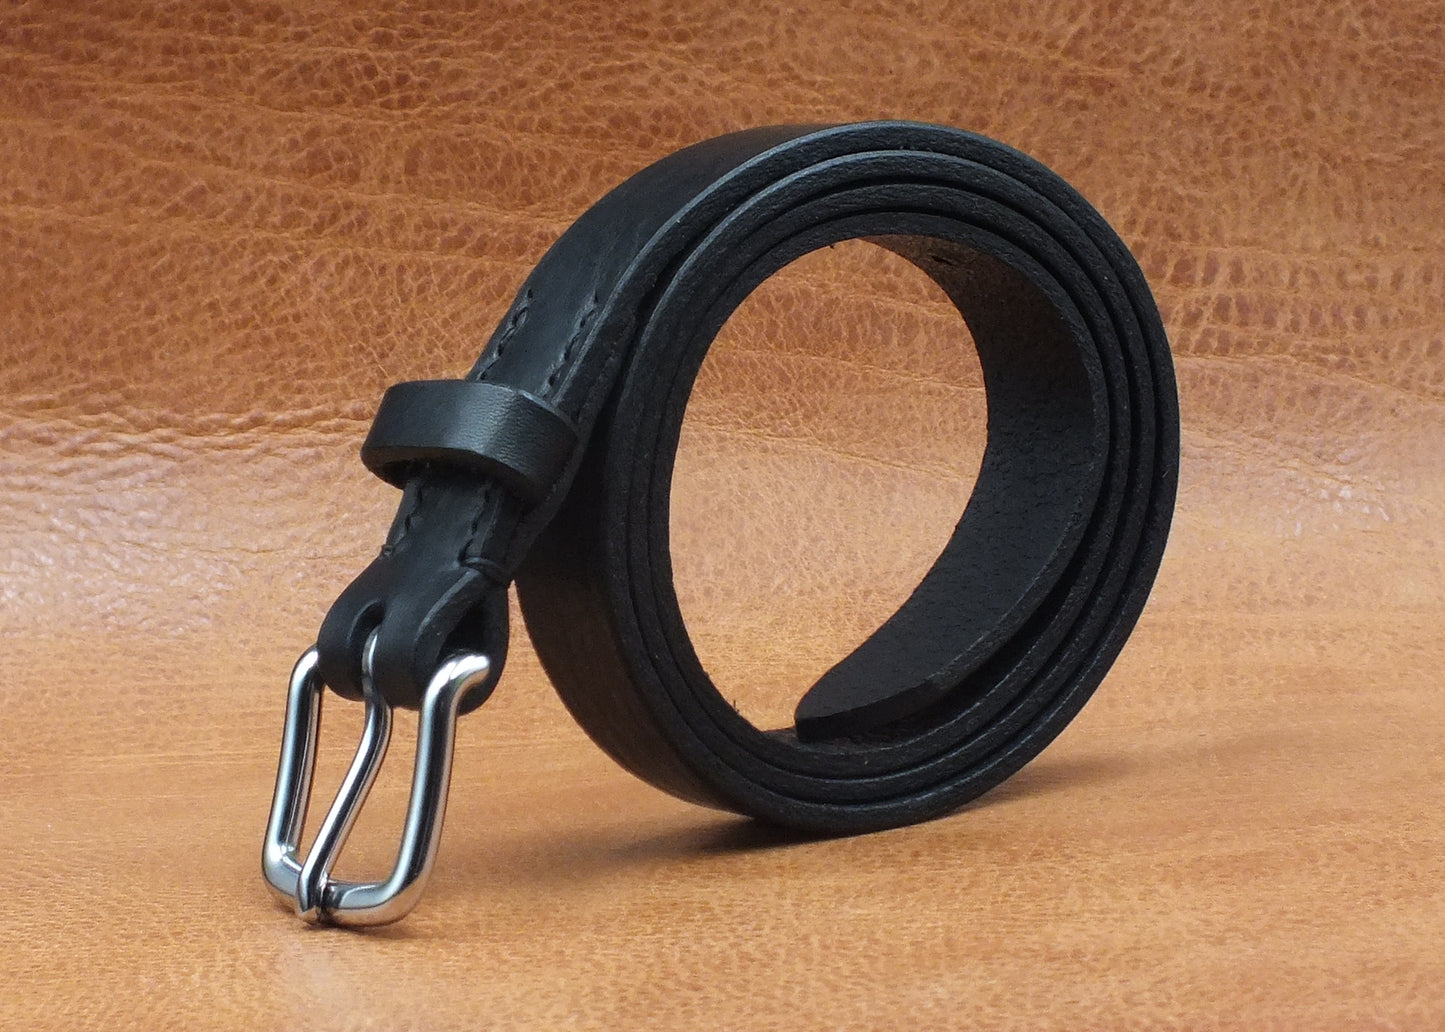 SALE - Black Leather Belt - 1" (25mm wide) - 32" to 36" Waist